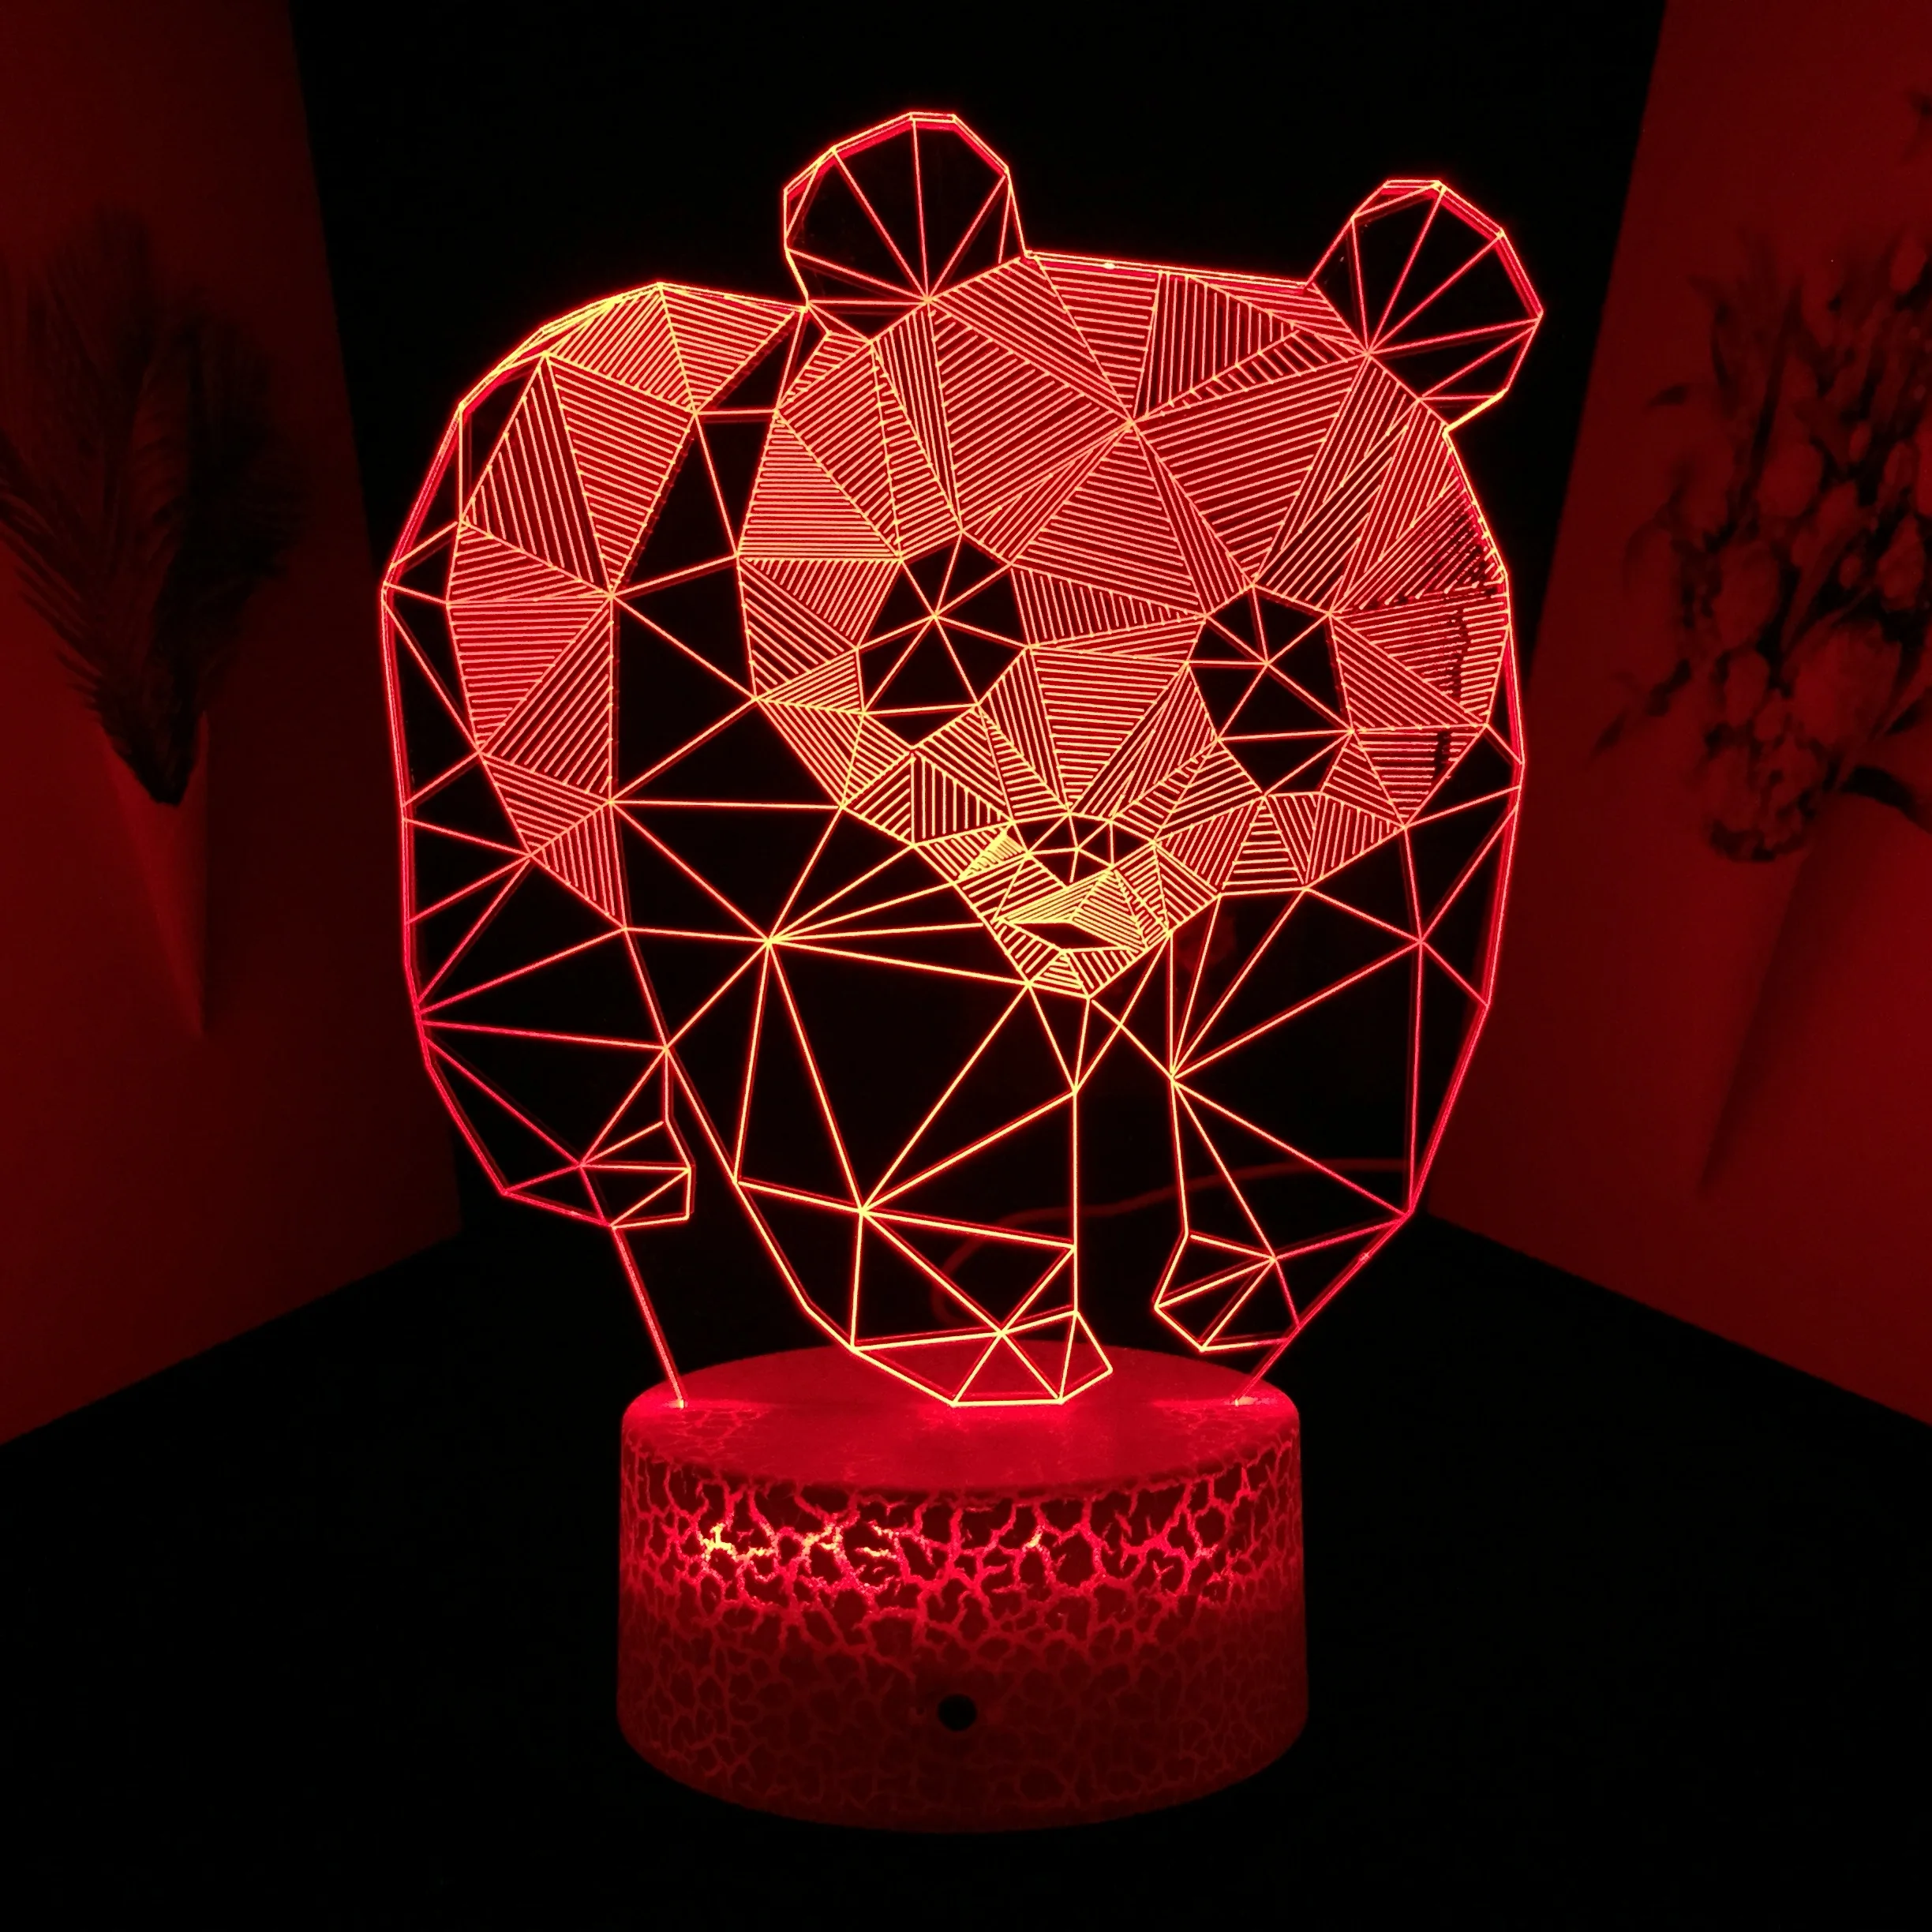 Panda Light Animal 3D Illusion Table Lamp for Kids Bedroom Decoration Nightlight LED RGB Touch Sensor Night Light Panda